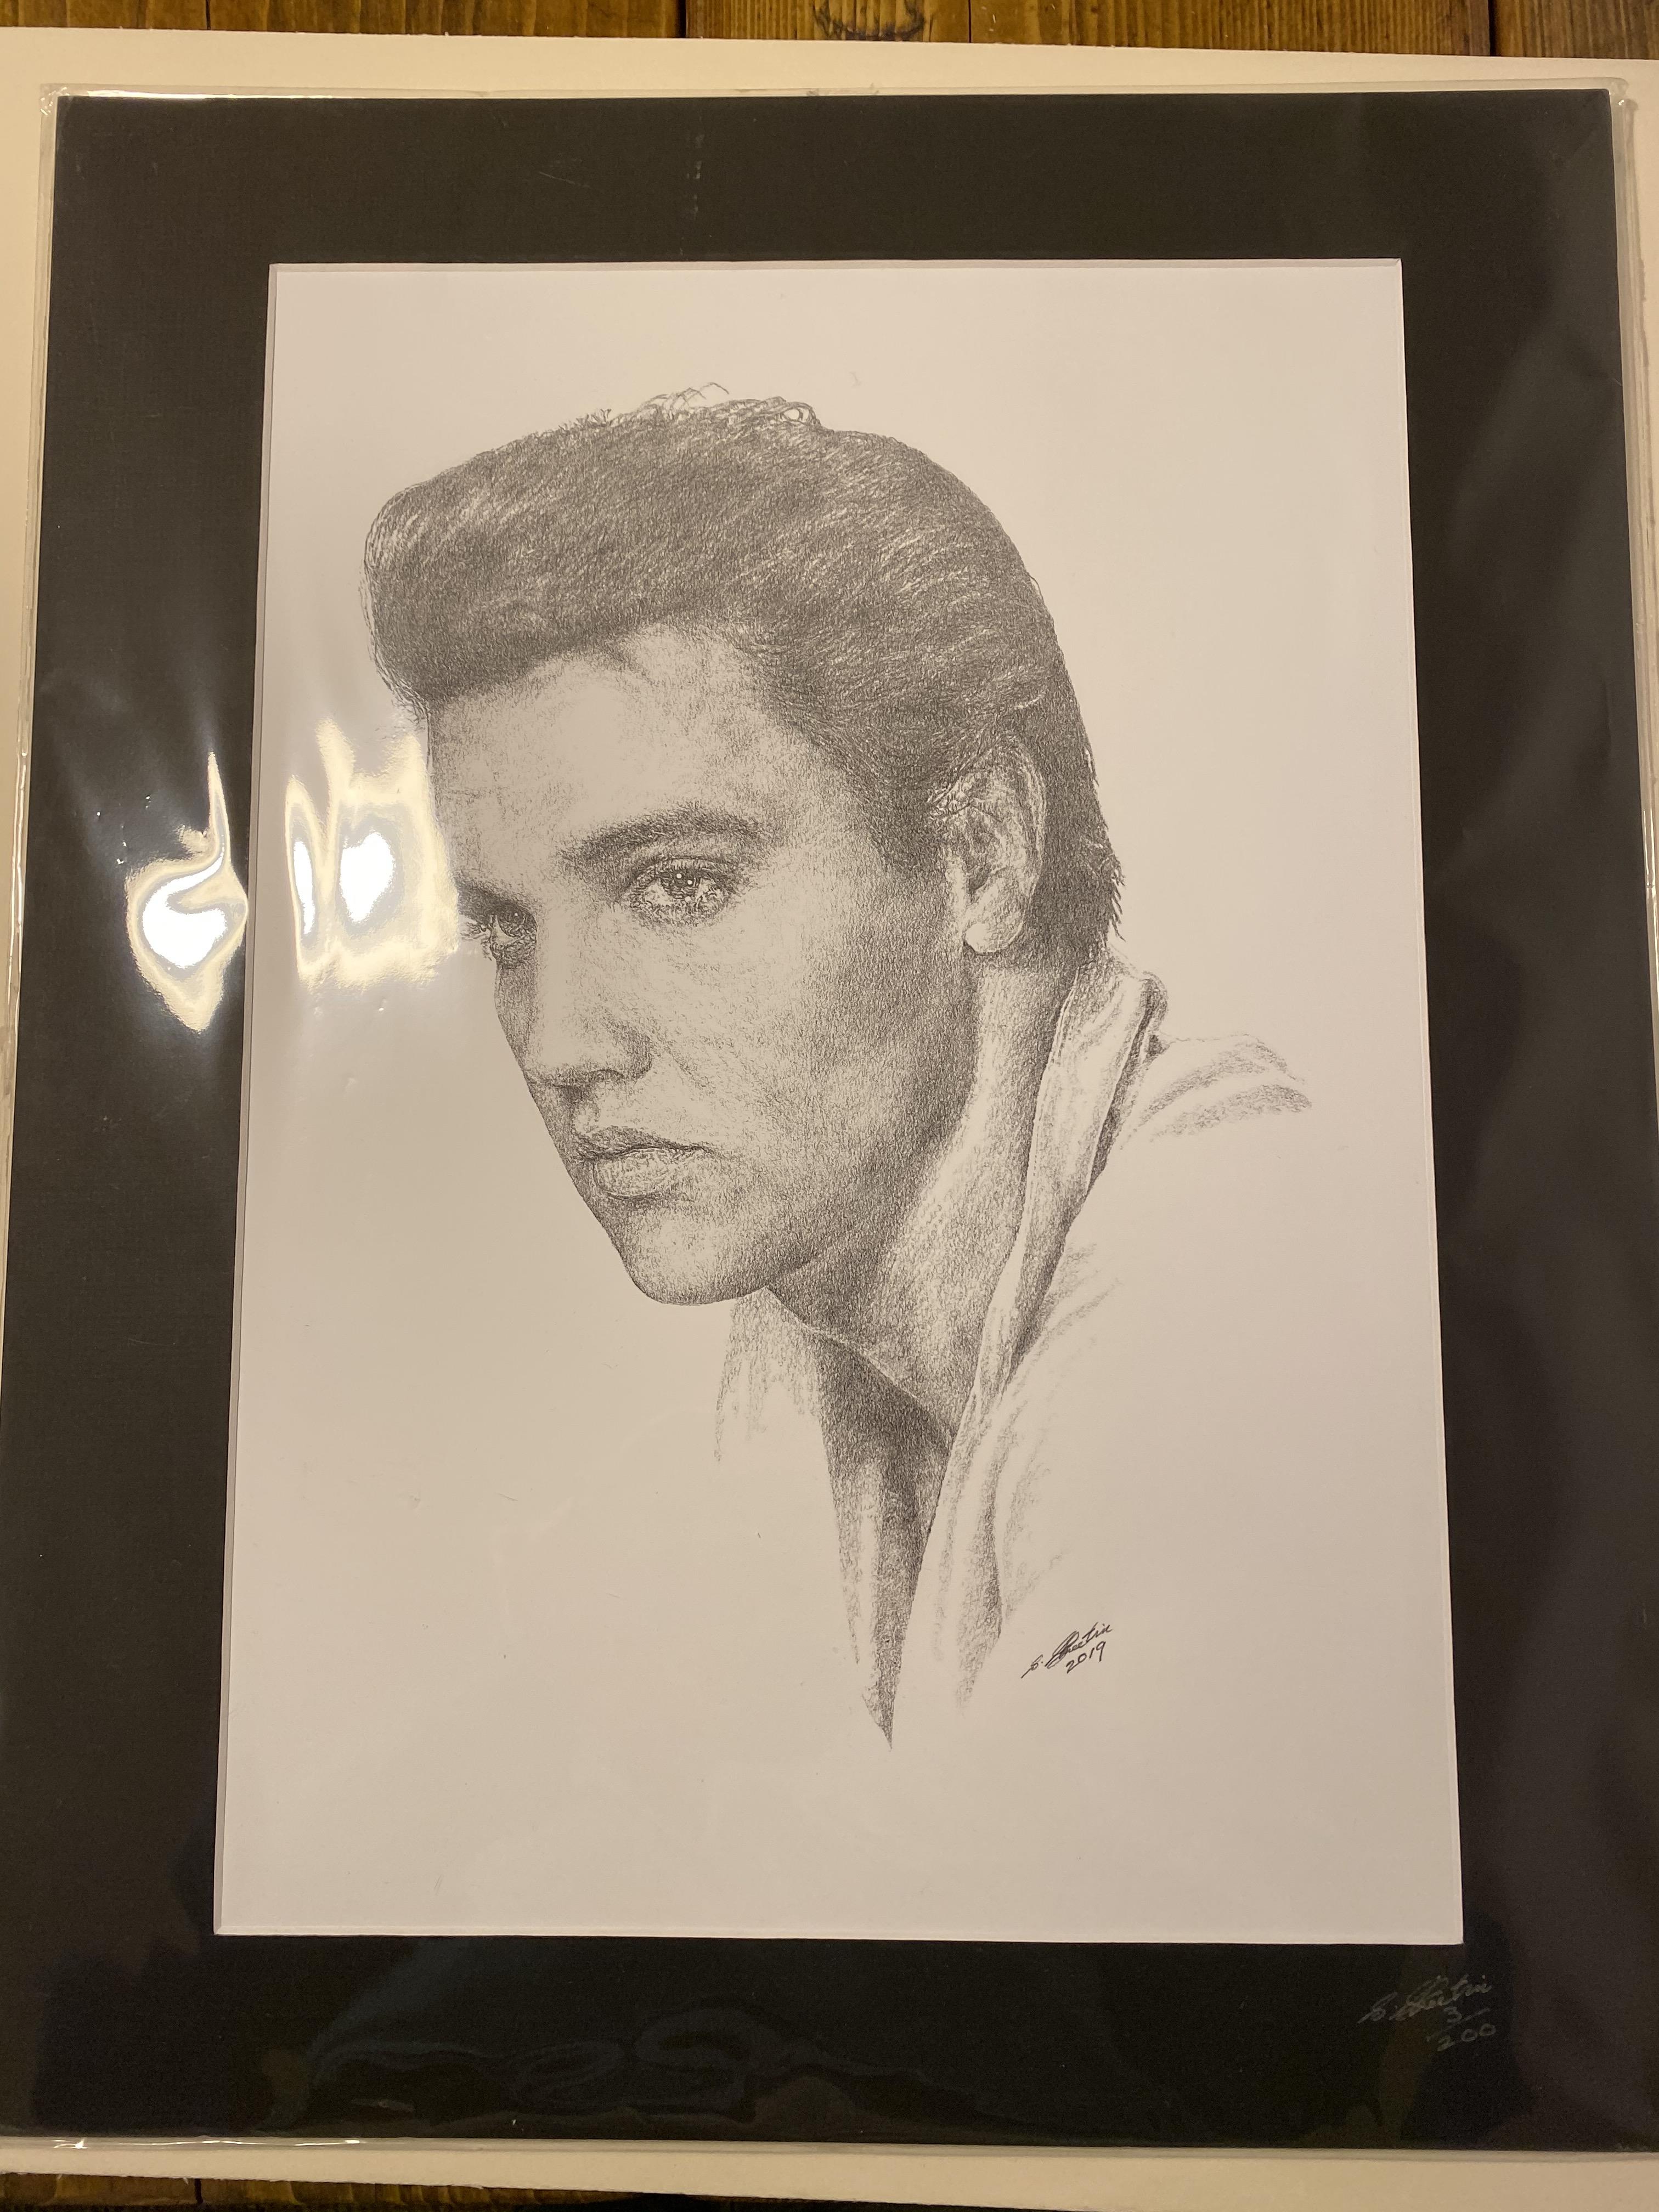 Steven Streetin Signed Limited Edition Prints of Elvis Presley - Image 2 of 5